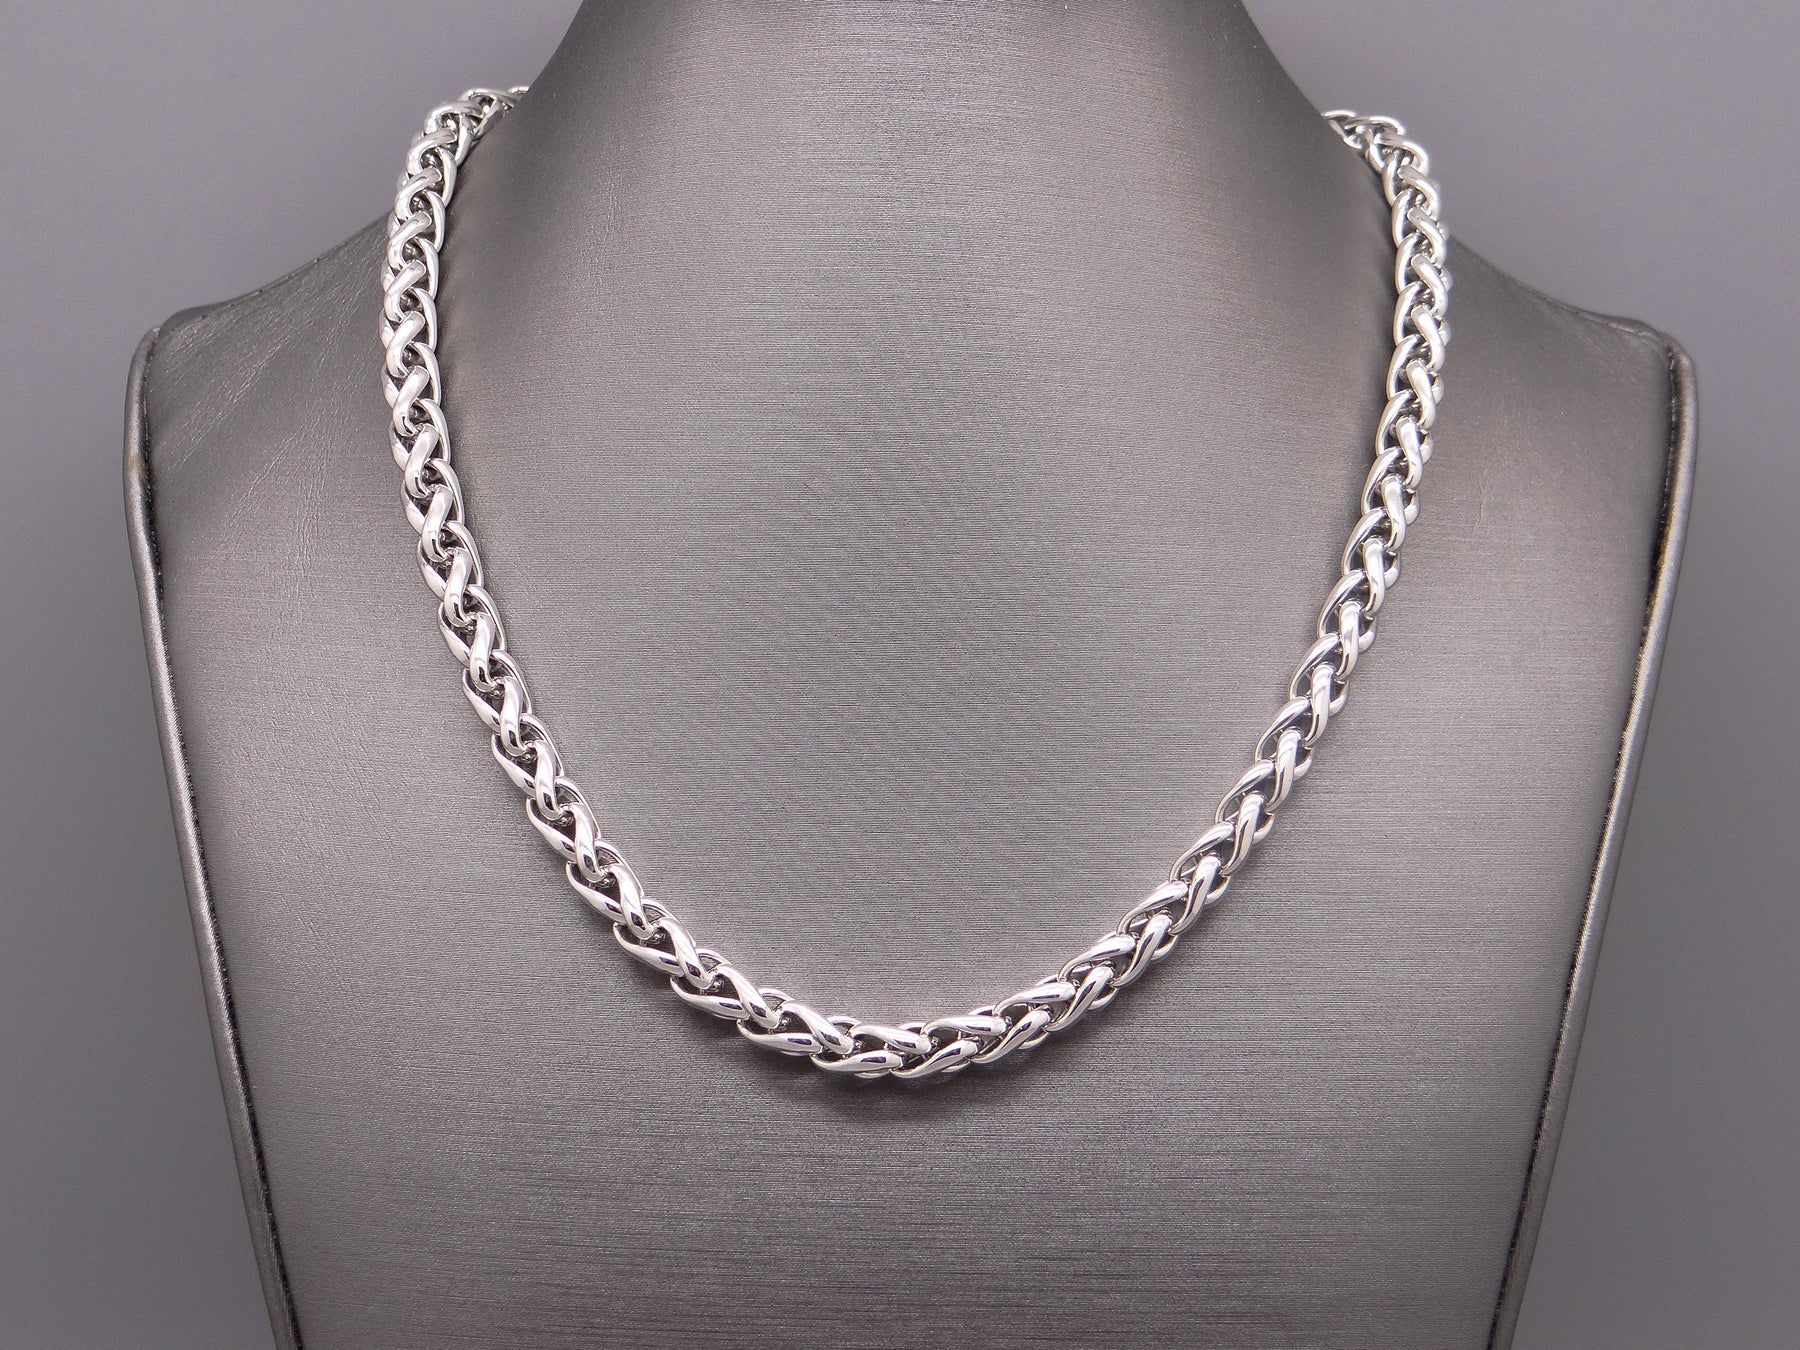 David Yurman Men's Curb Chain Necklace in Silver